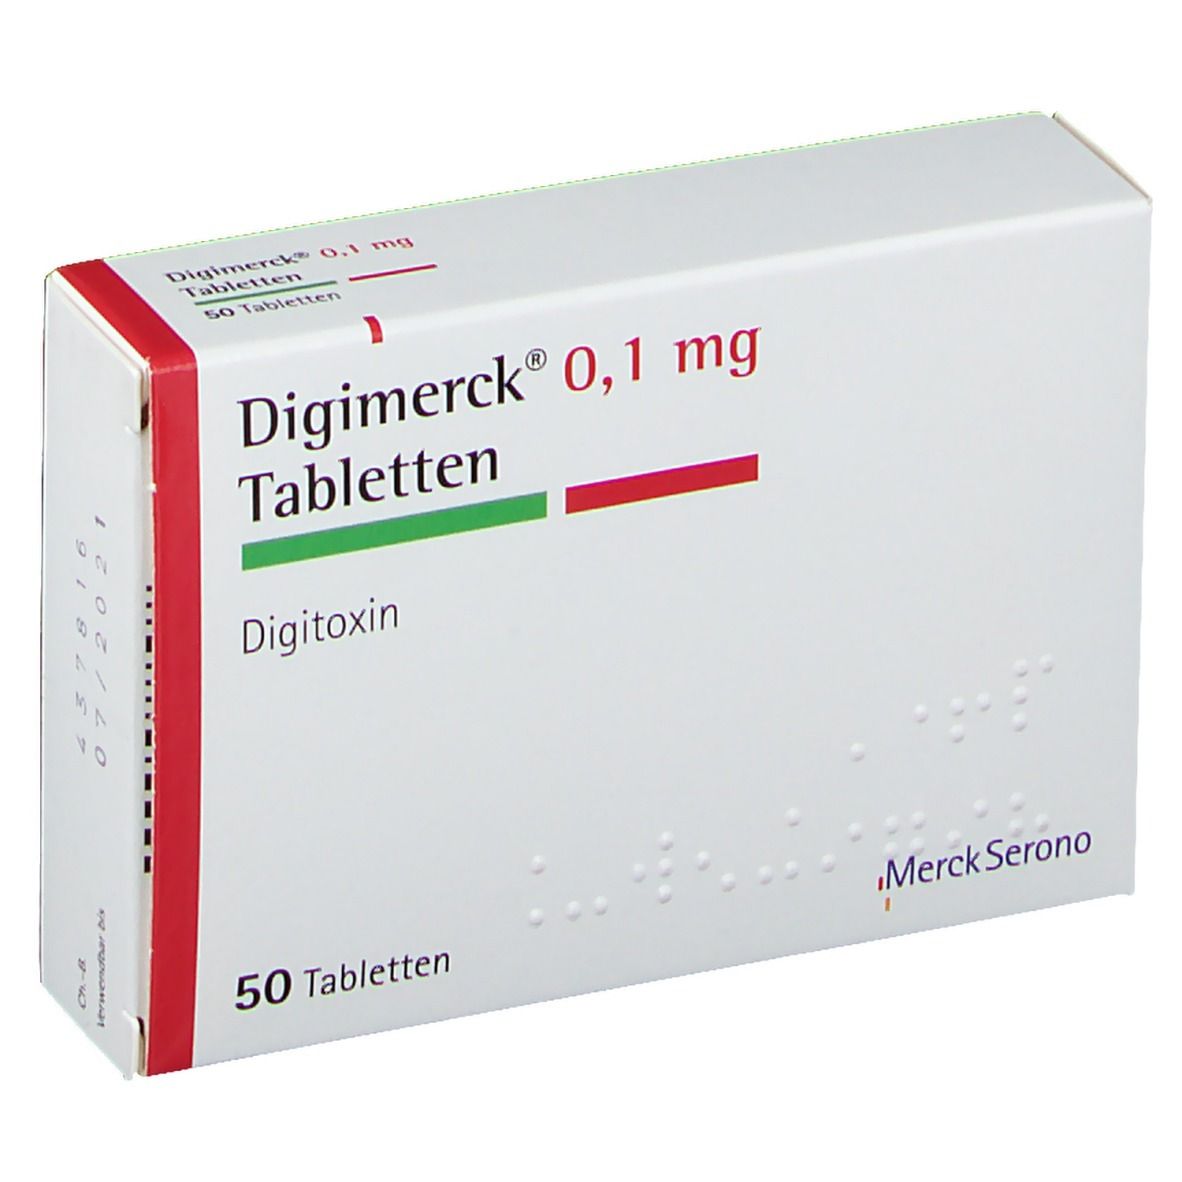 Digimerck® 0,1 mg